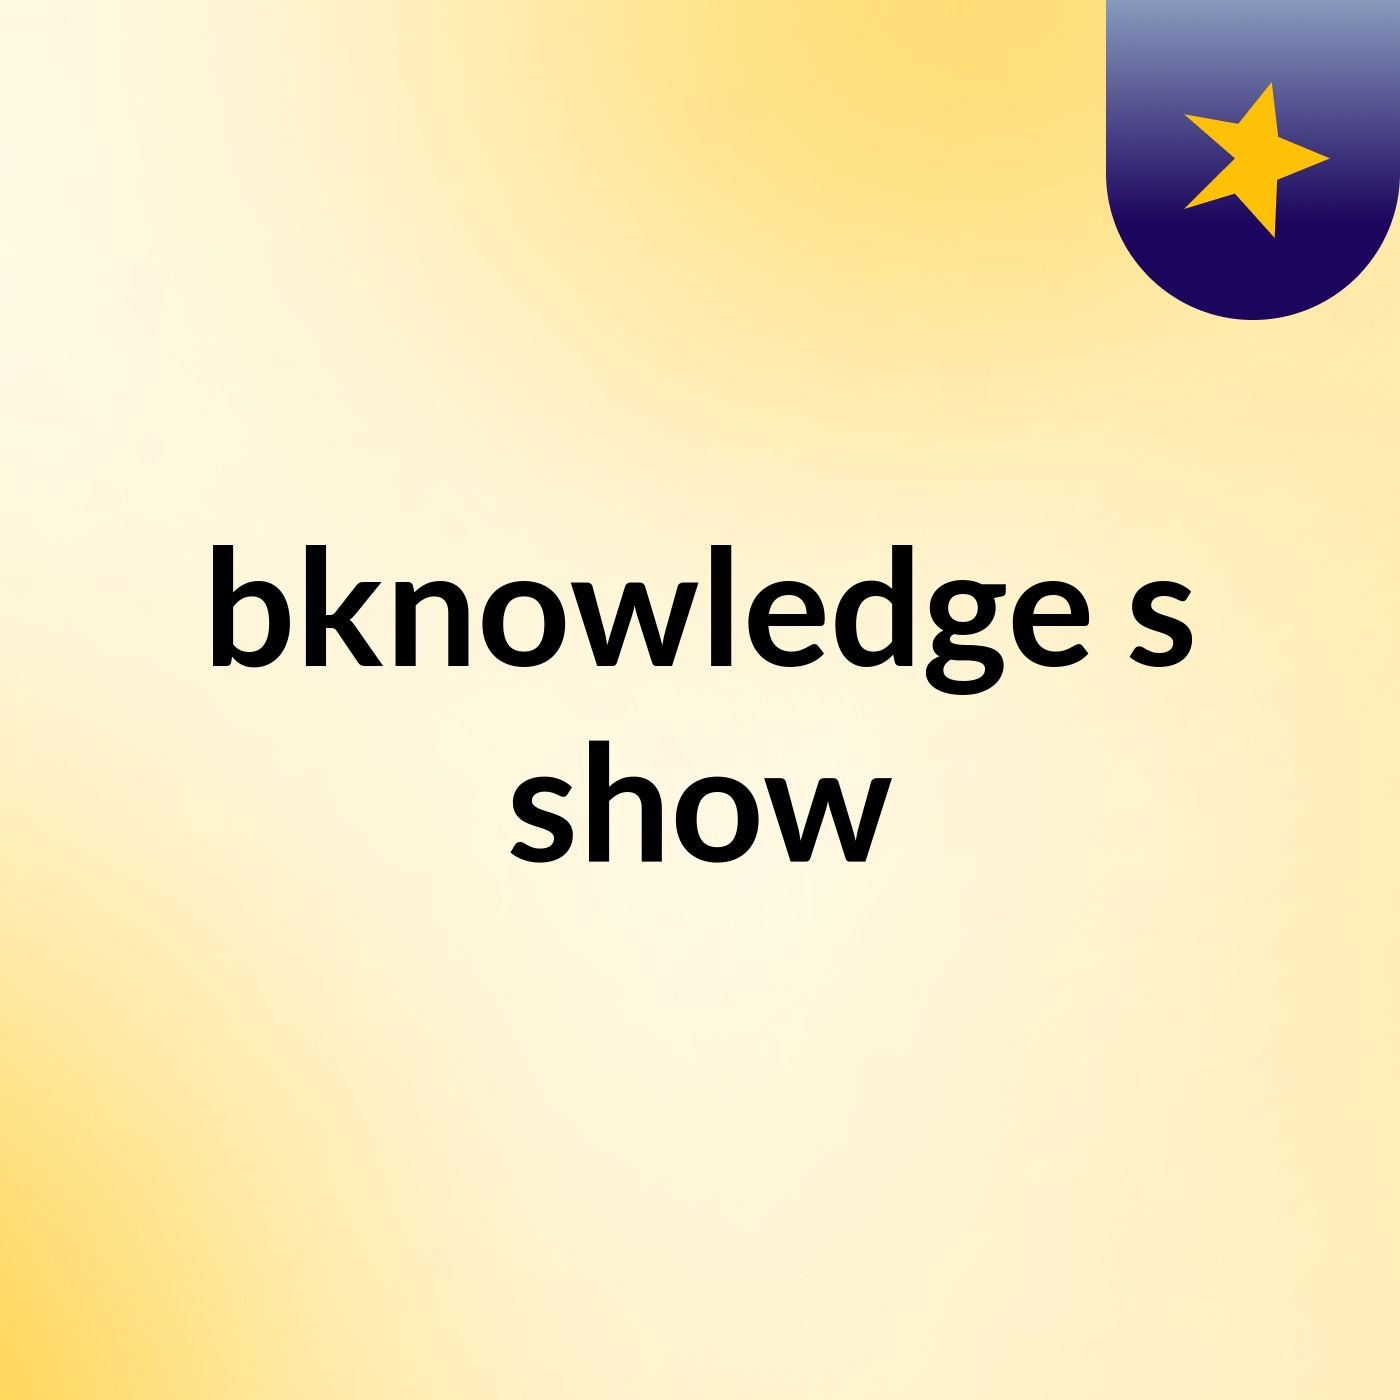 bknowledge's show